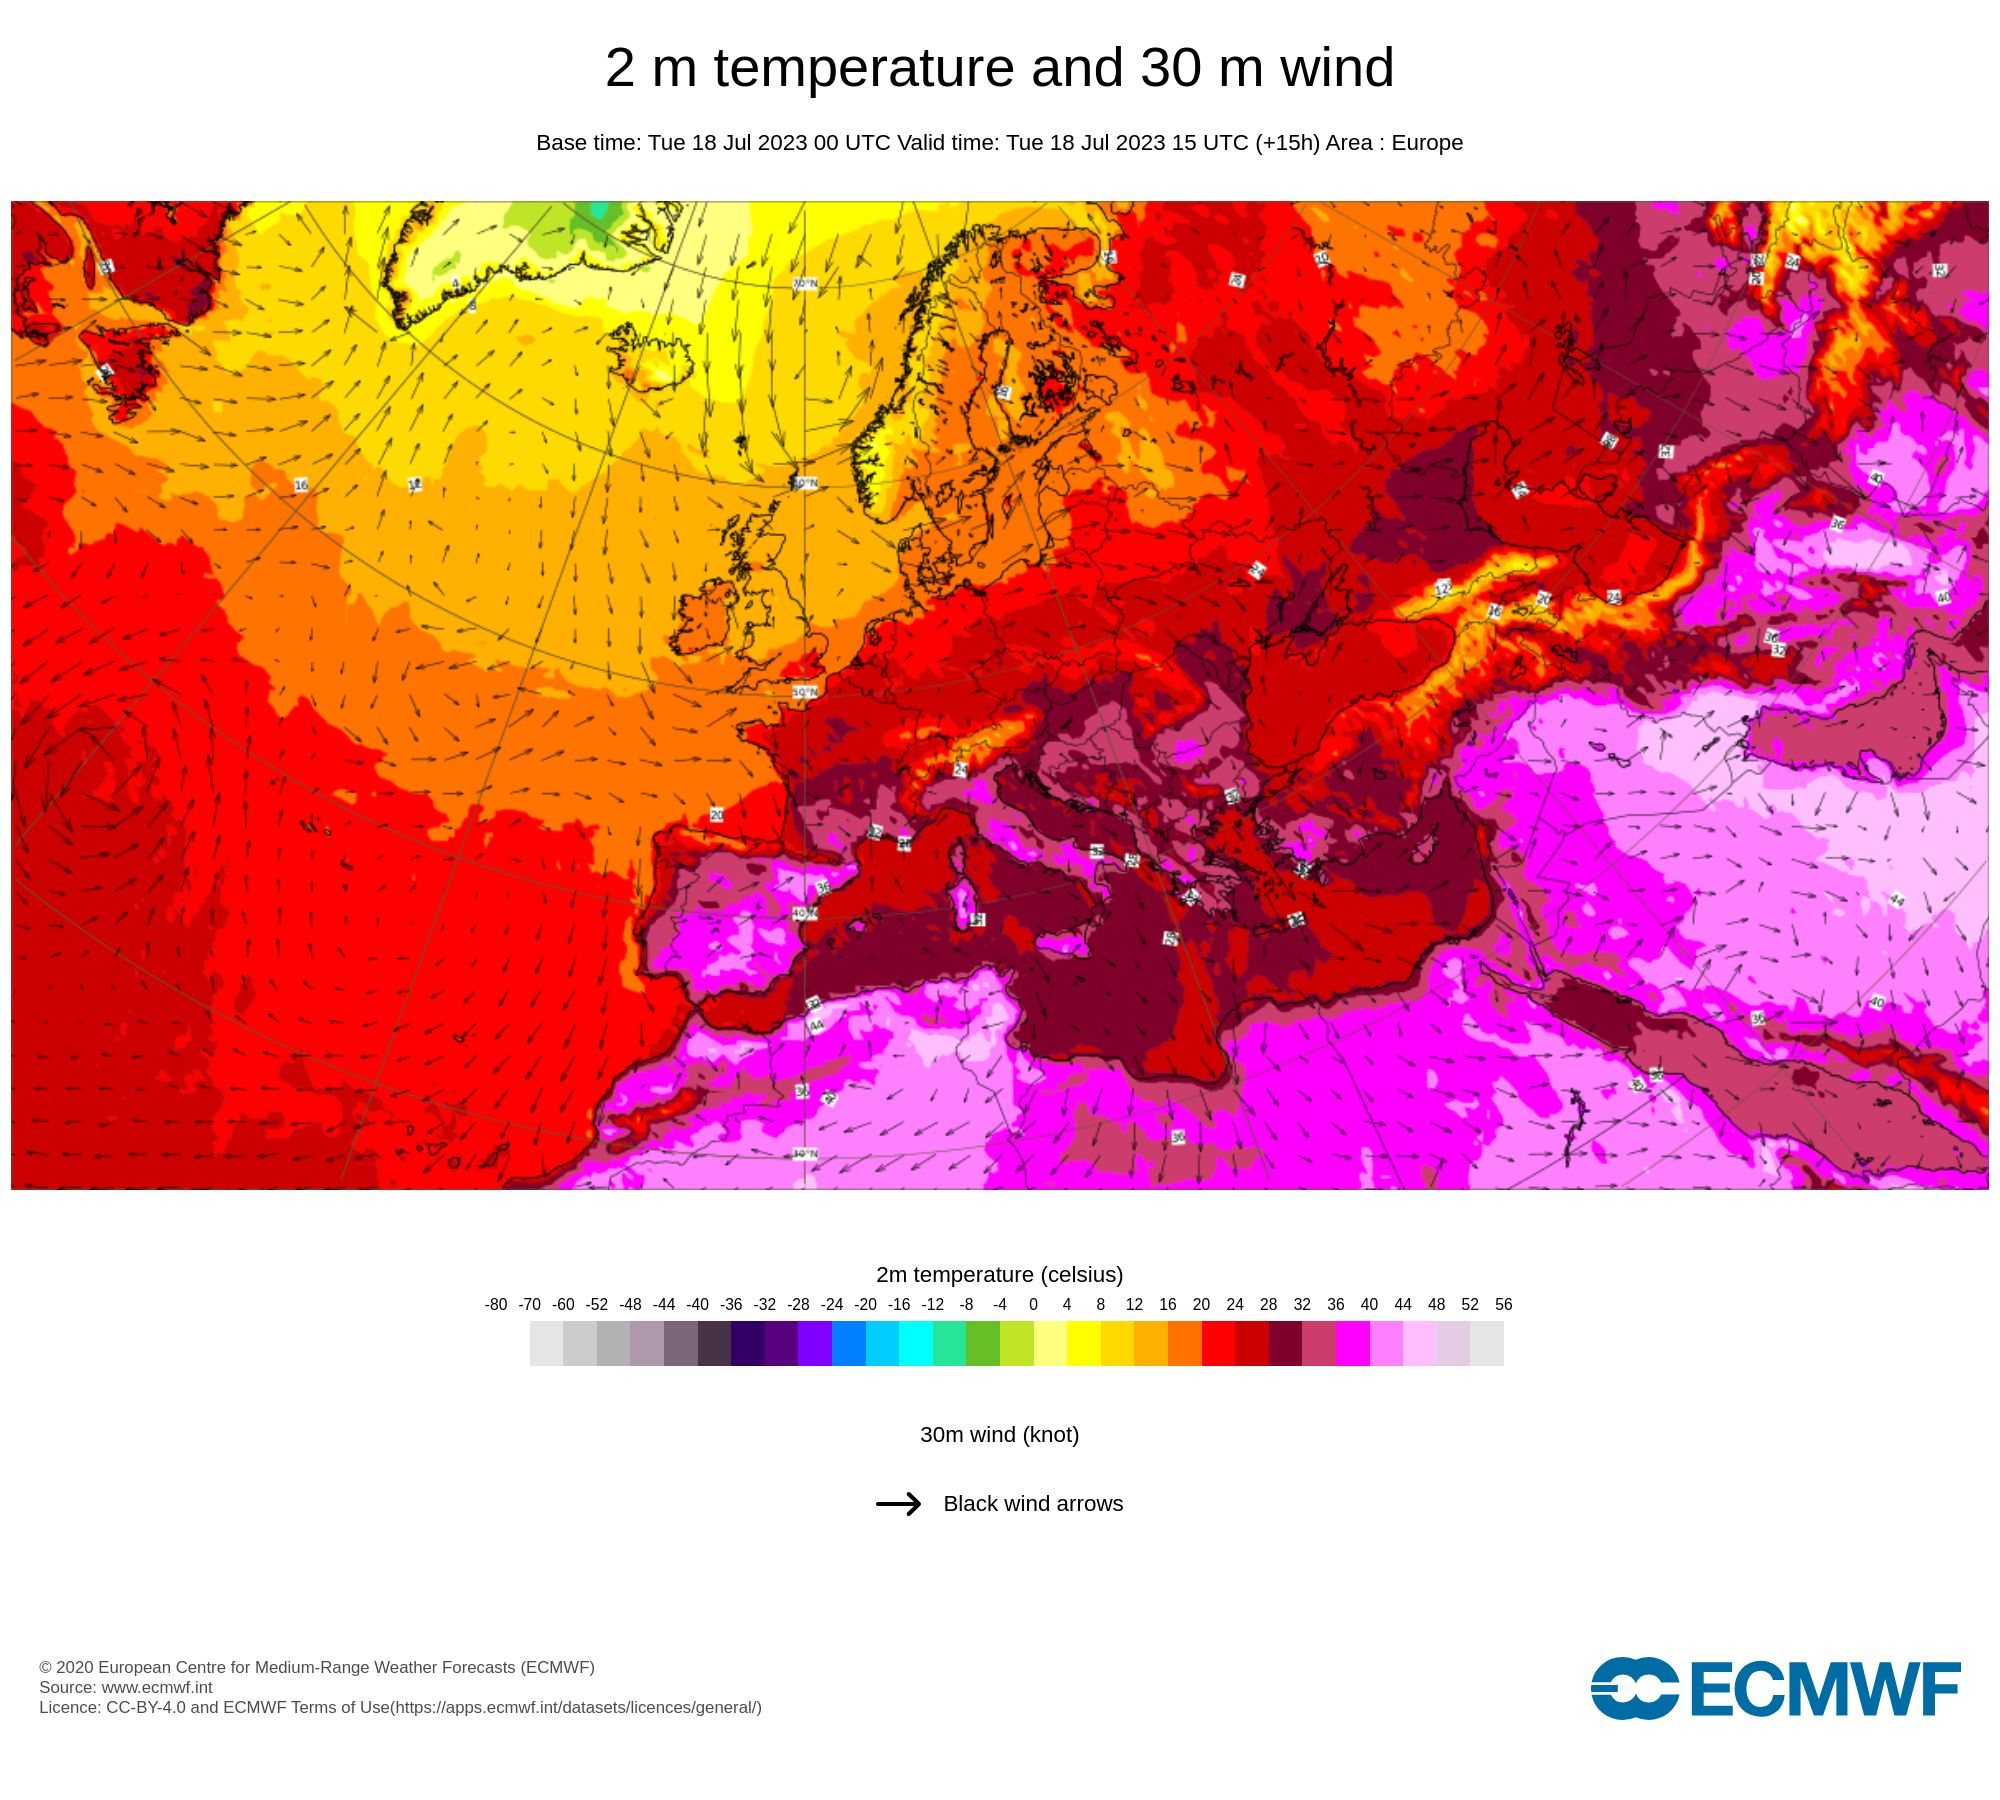 18 de julho de 2023: temperaturas às 16 horas (em Portugal continental)